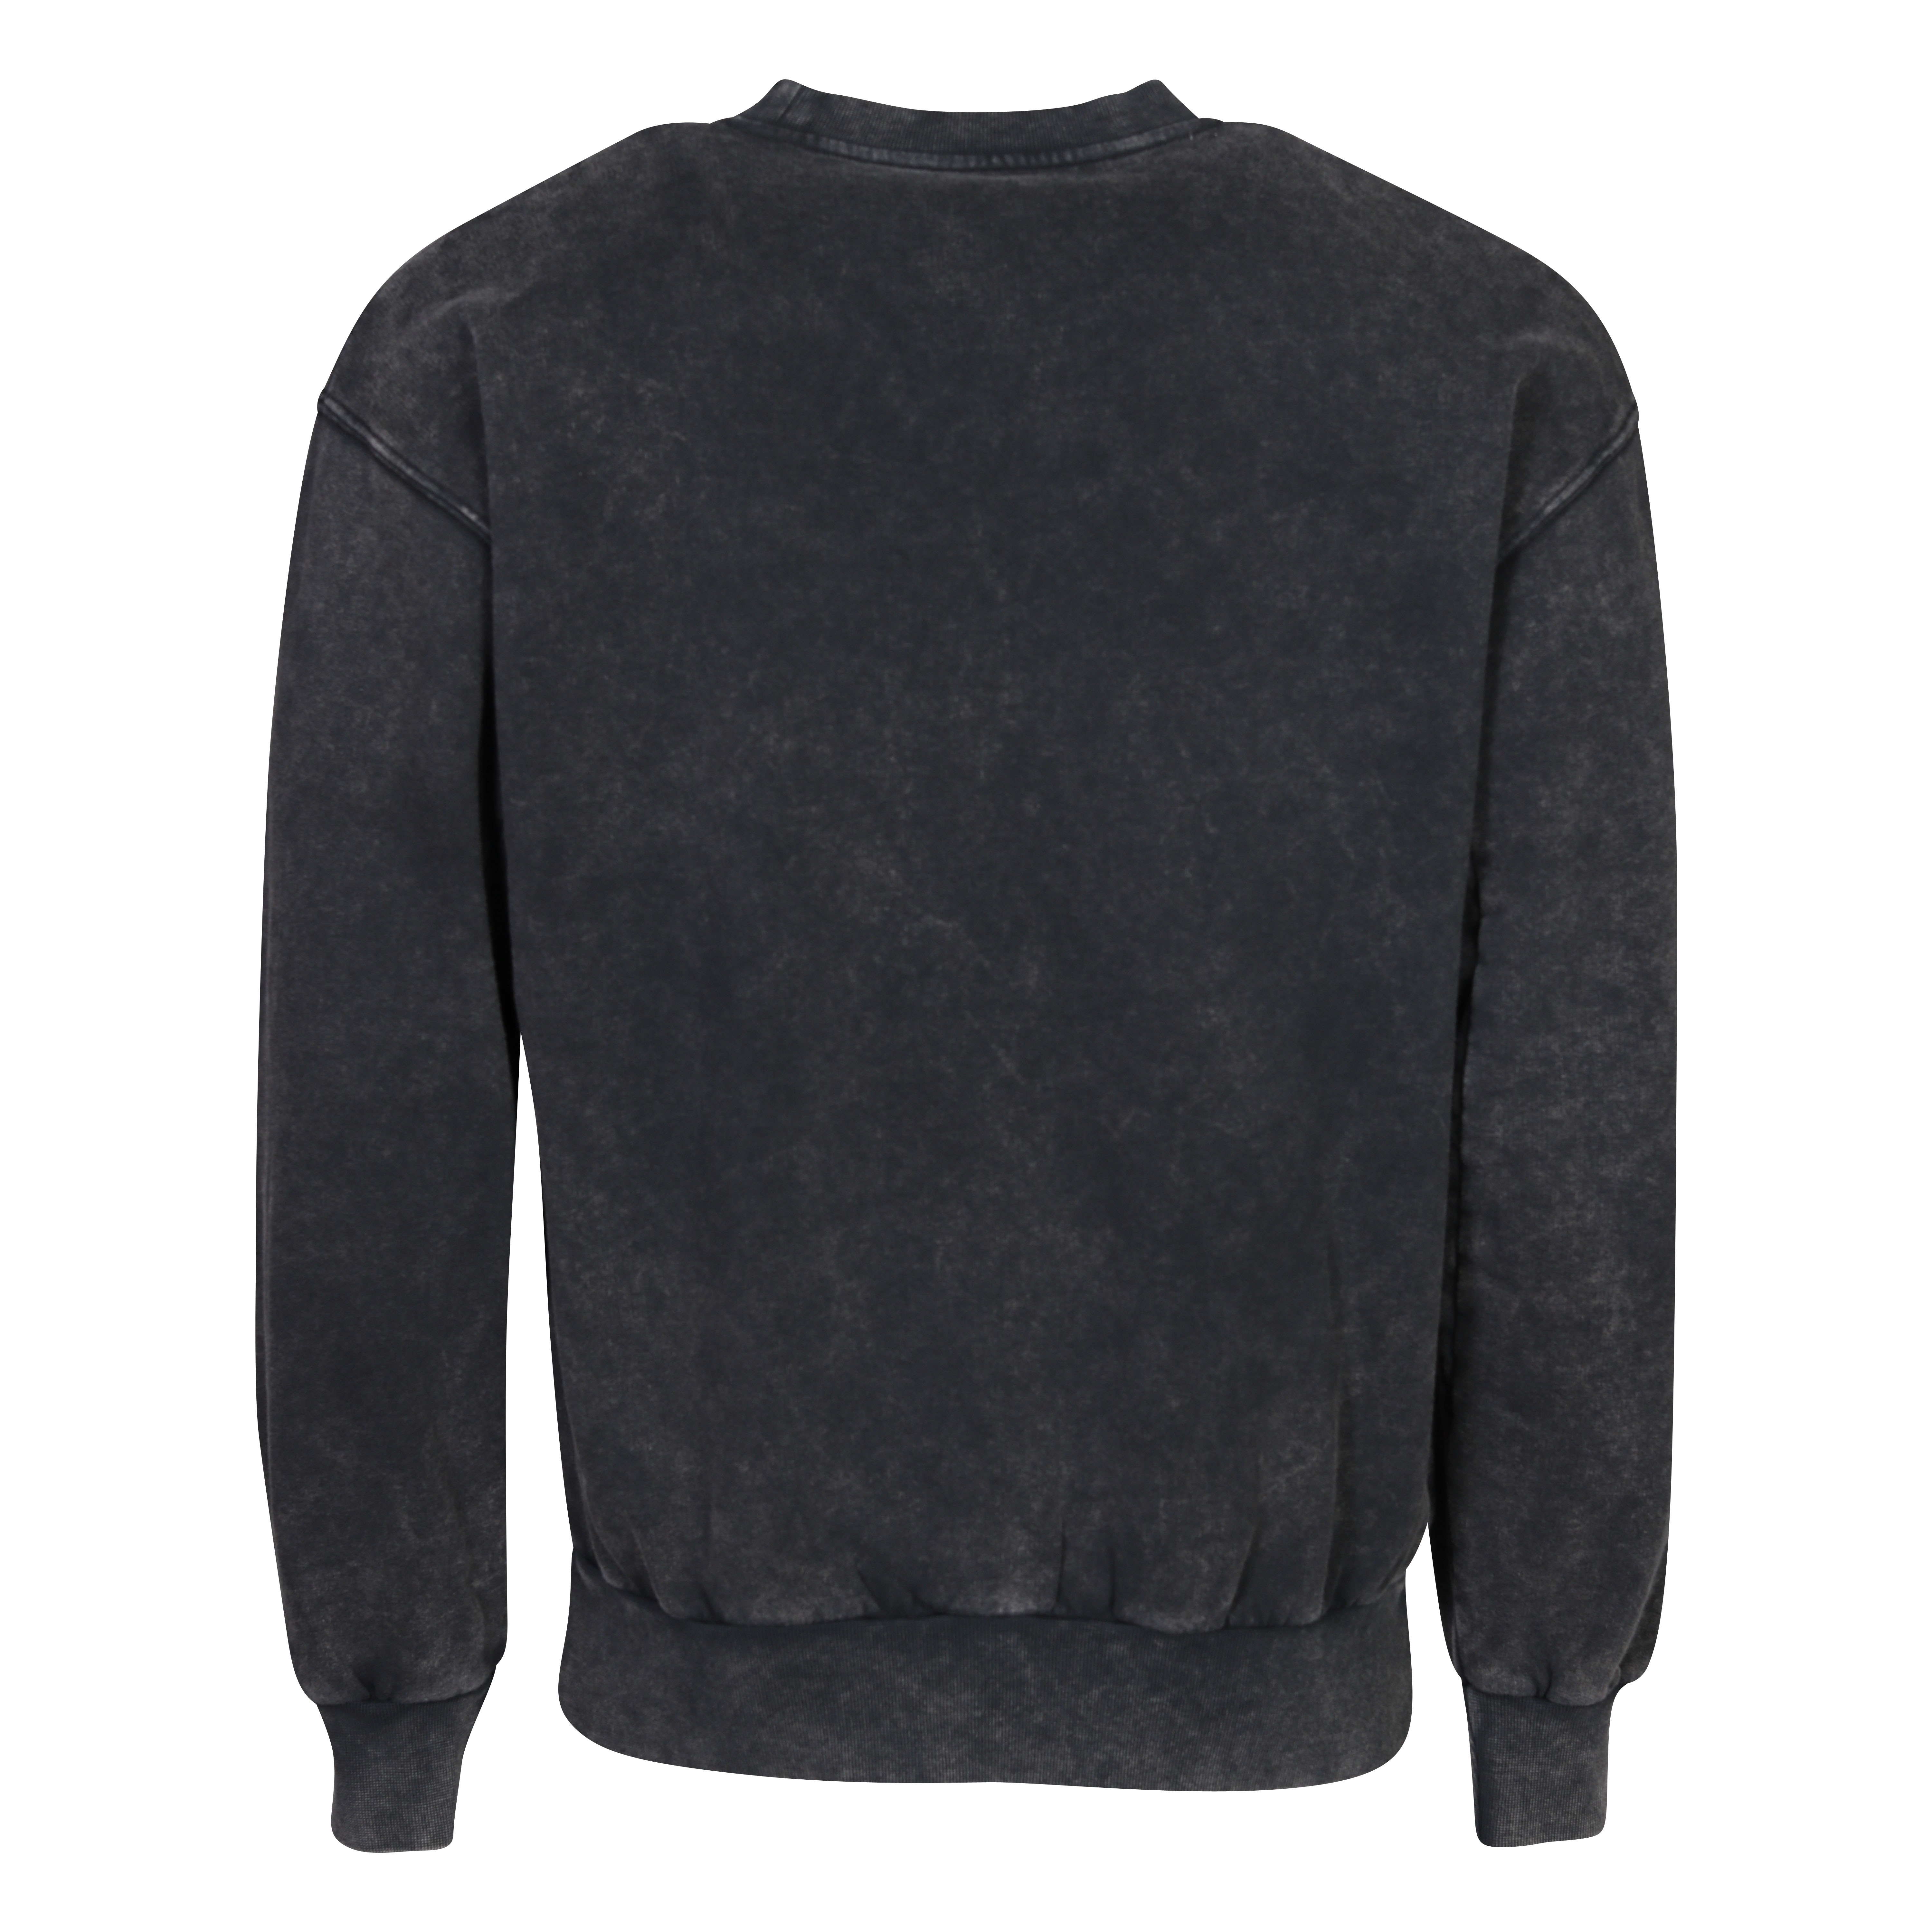 Unisex Aries No Problemo Sweatshirt in Black